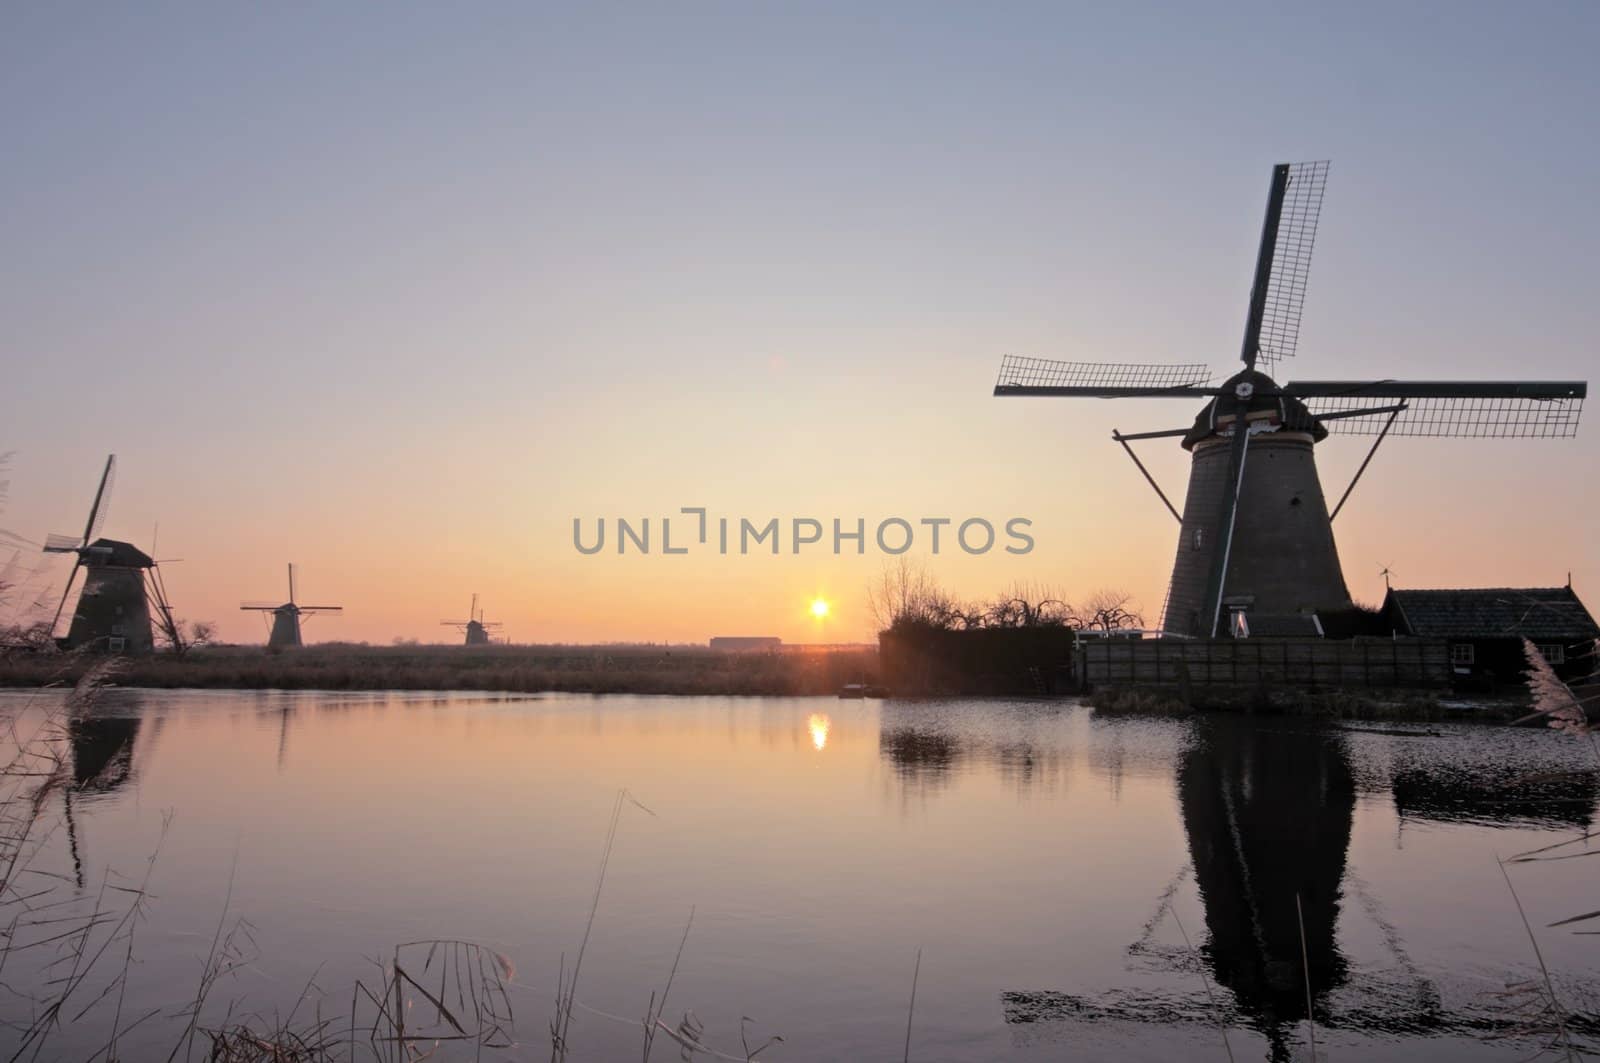 Windmills in wintertime at Kinderdijk in the Netherlands by devy